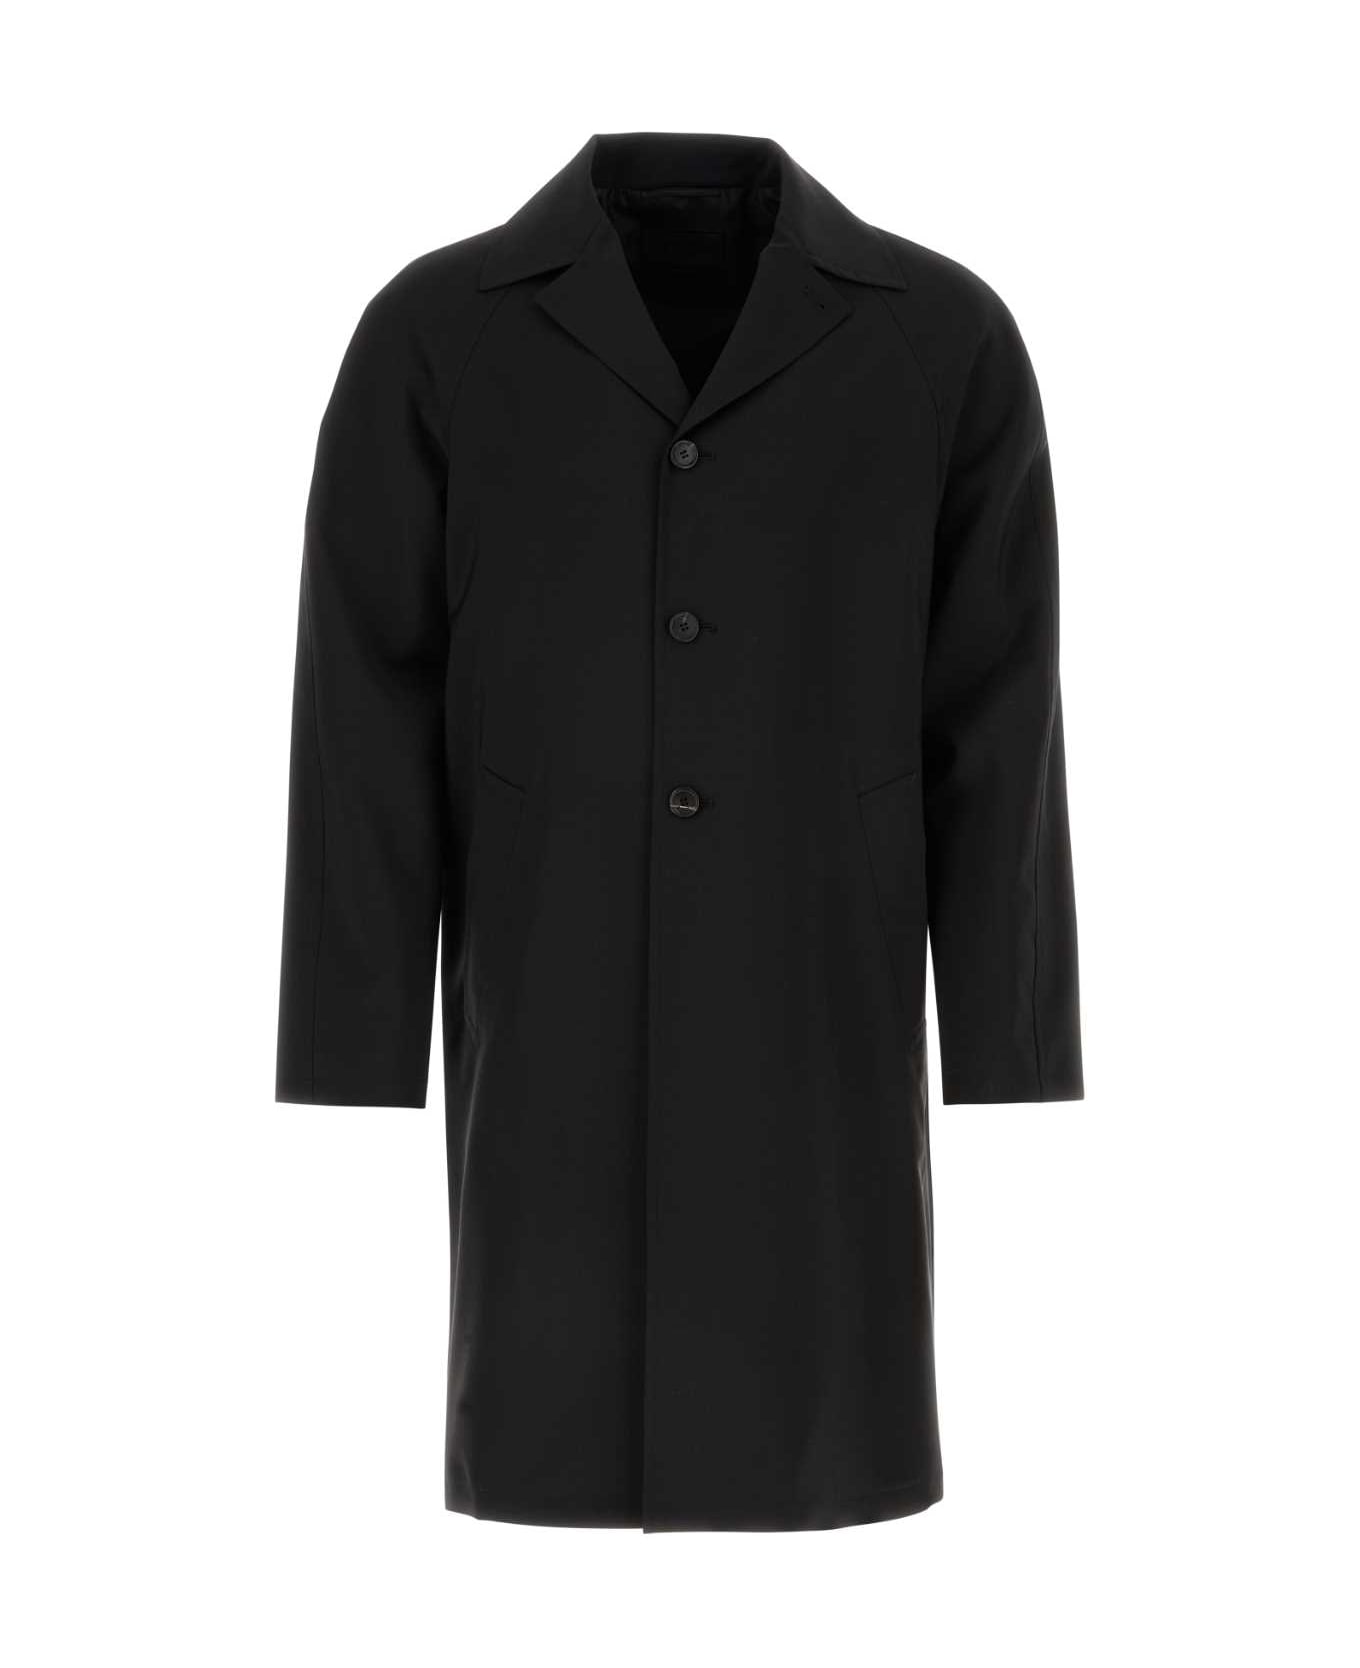 Prada Black Wool Blend Overcoat - NERO